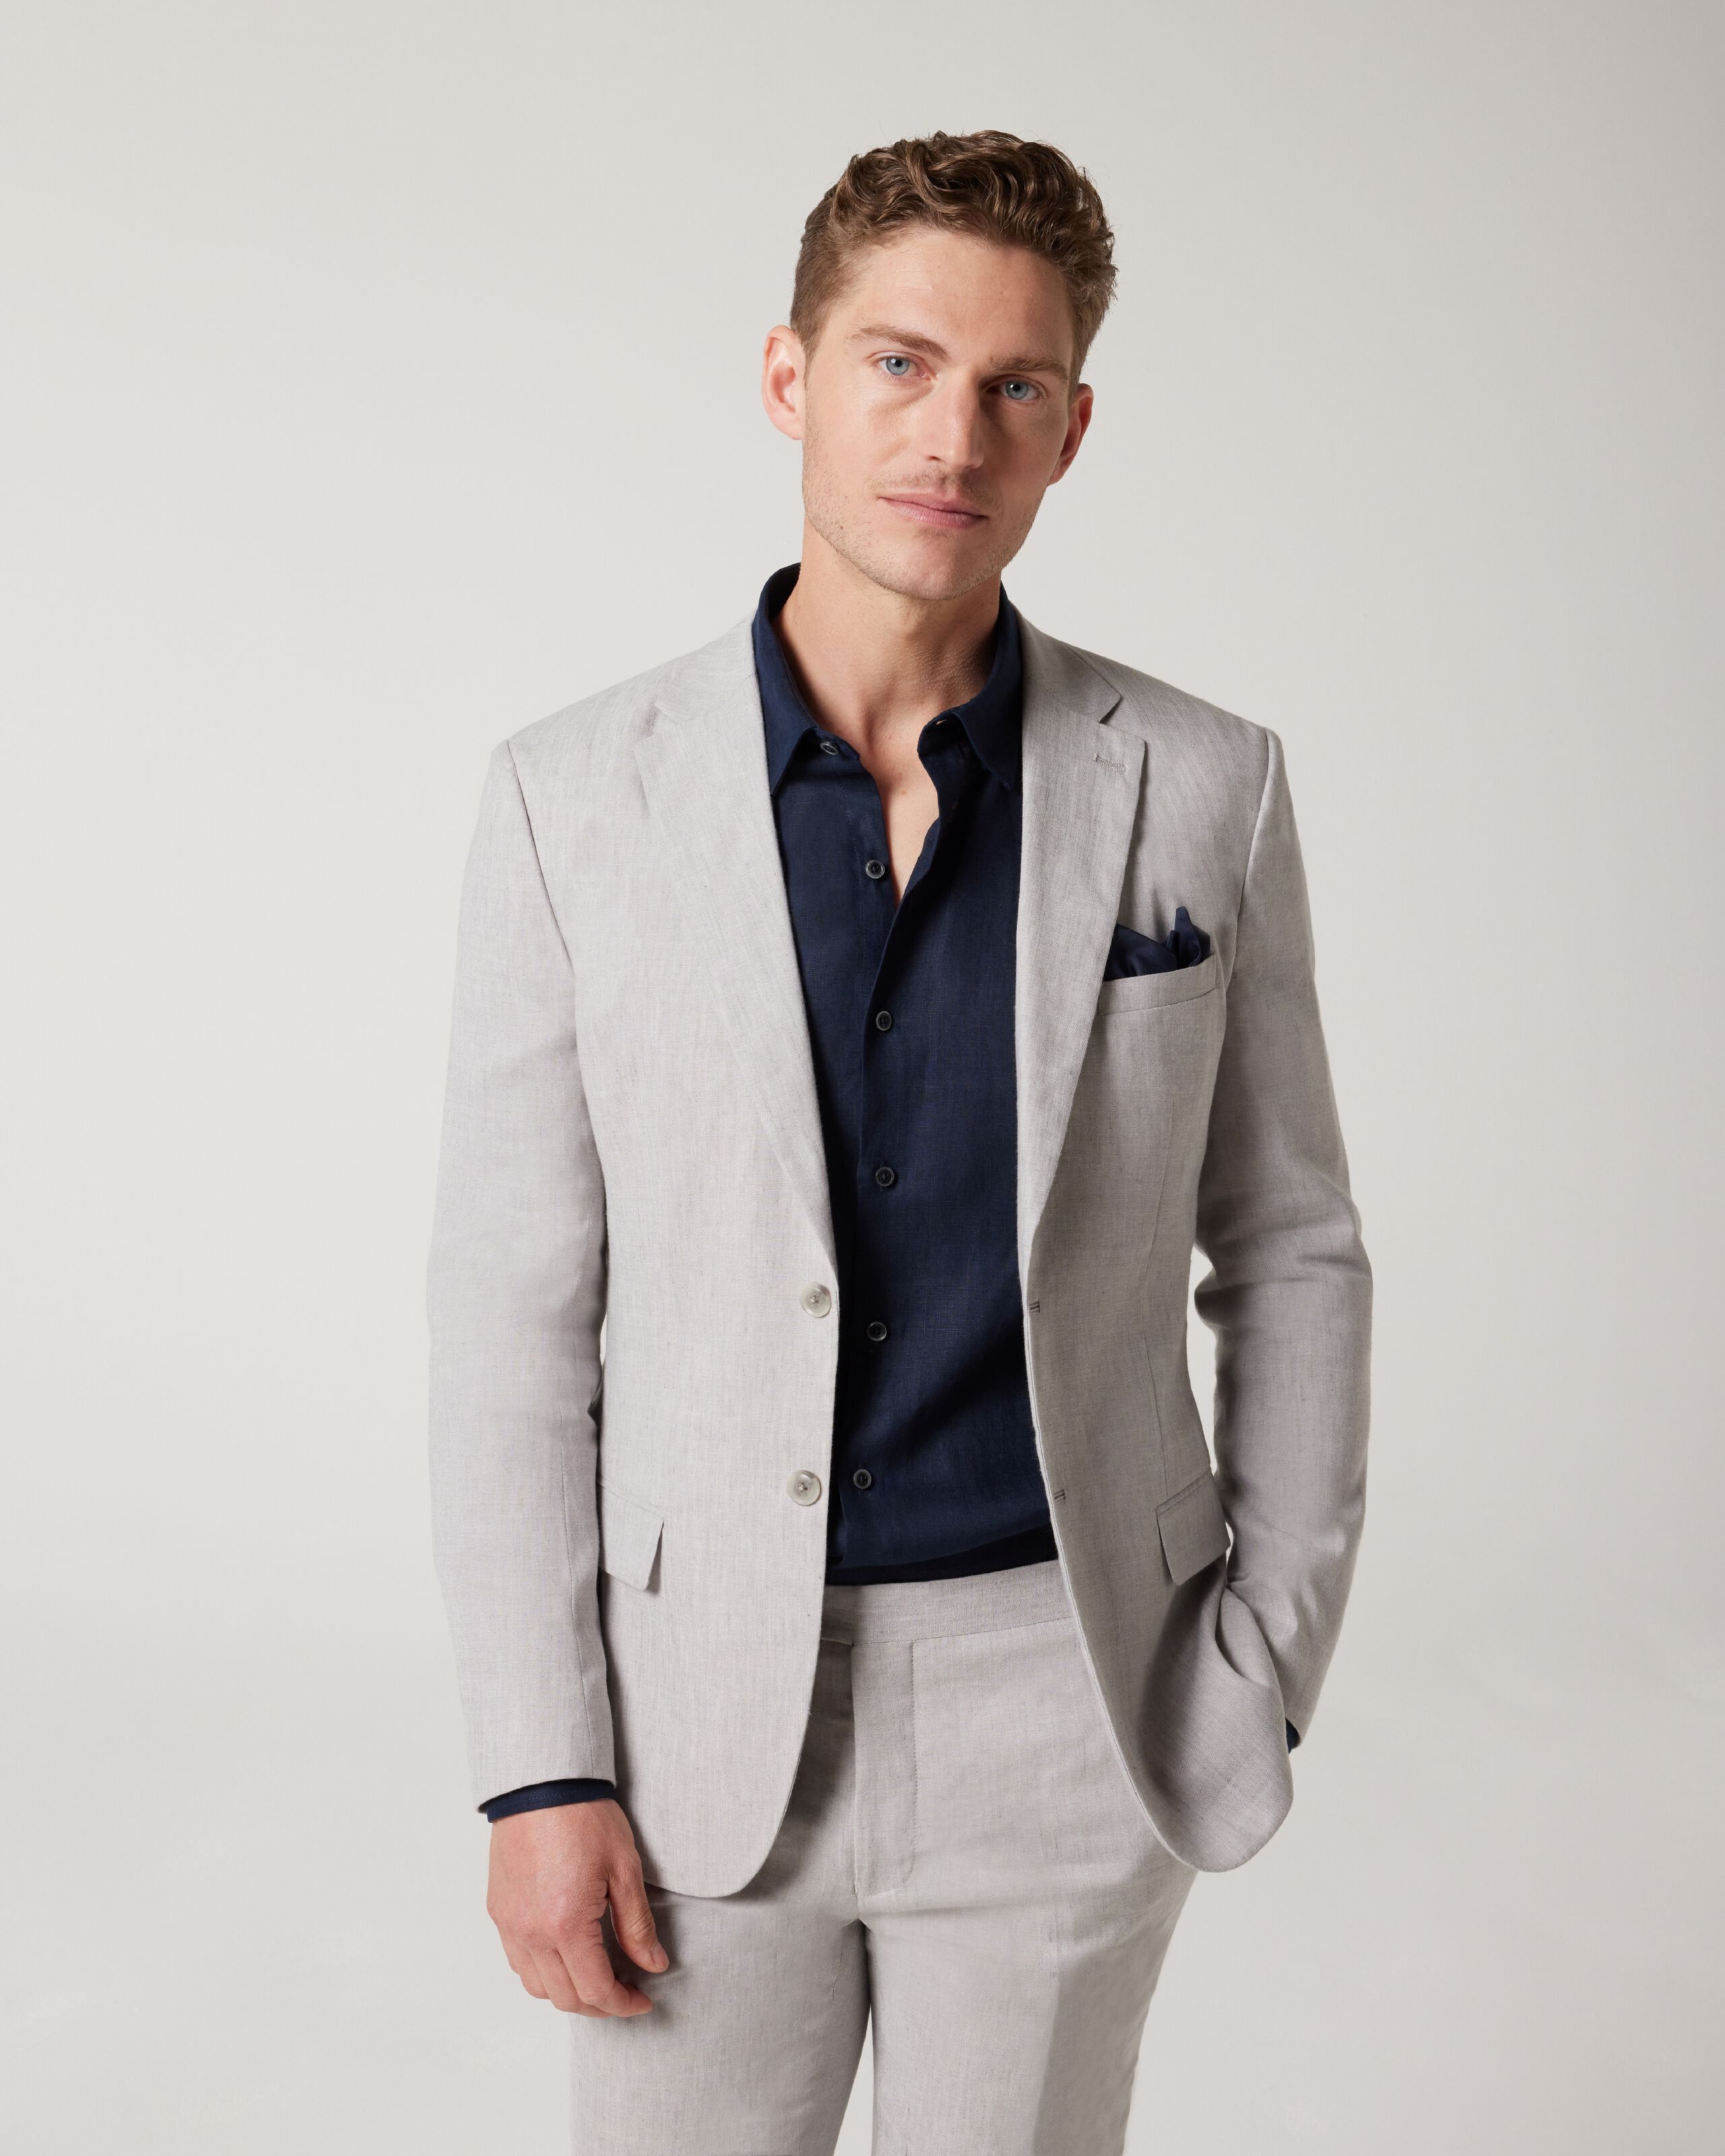 Men's Gray Suit Jackets & Blazers - Suit Jackets & Sport Jackets - Express